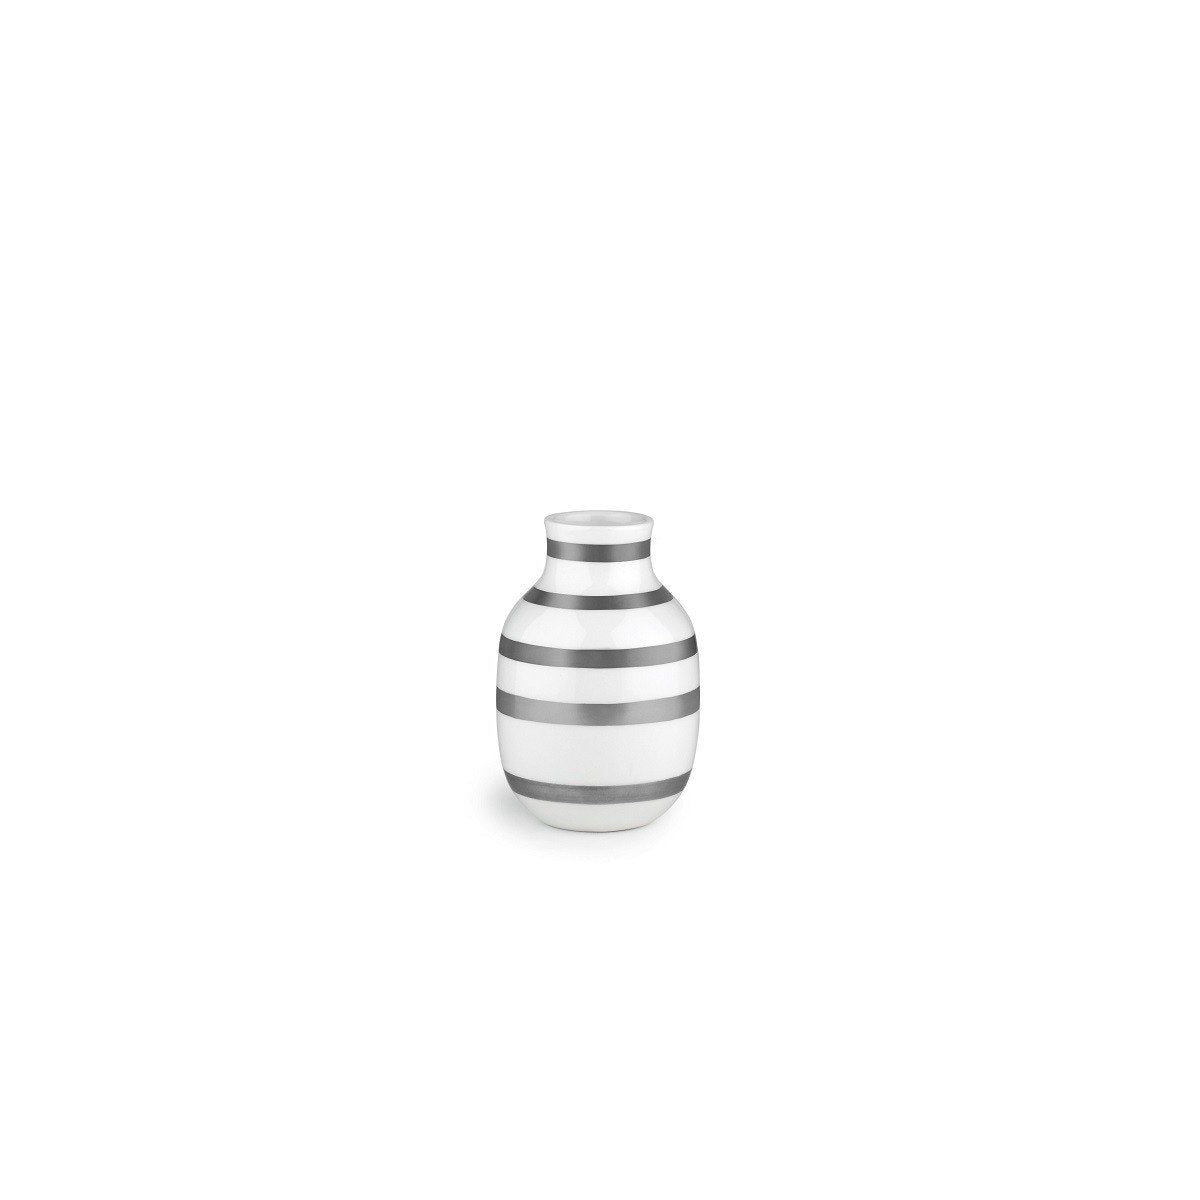 Kähler Omaggio Vase Silver, Small